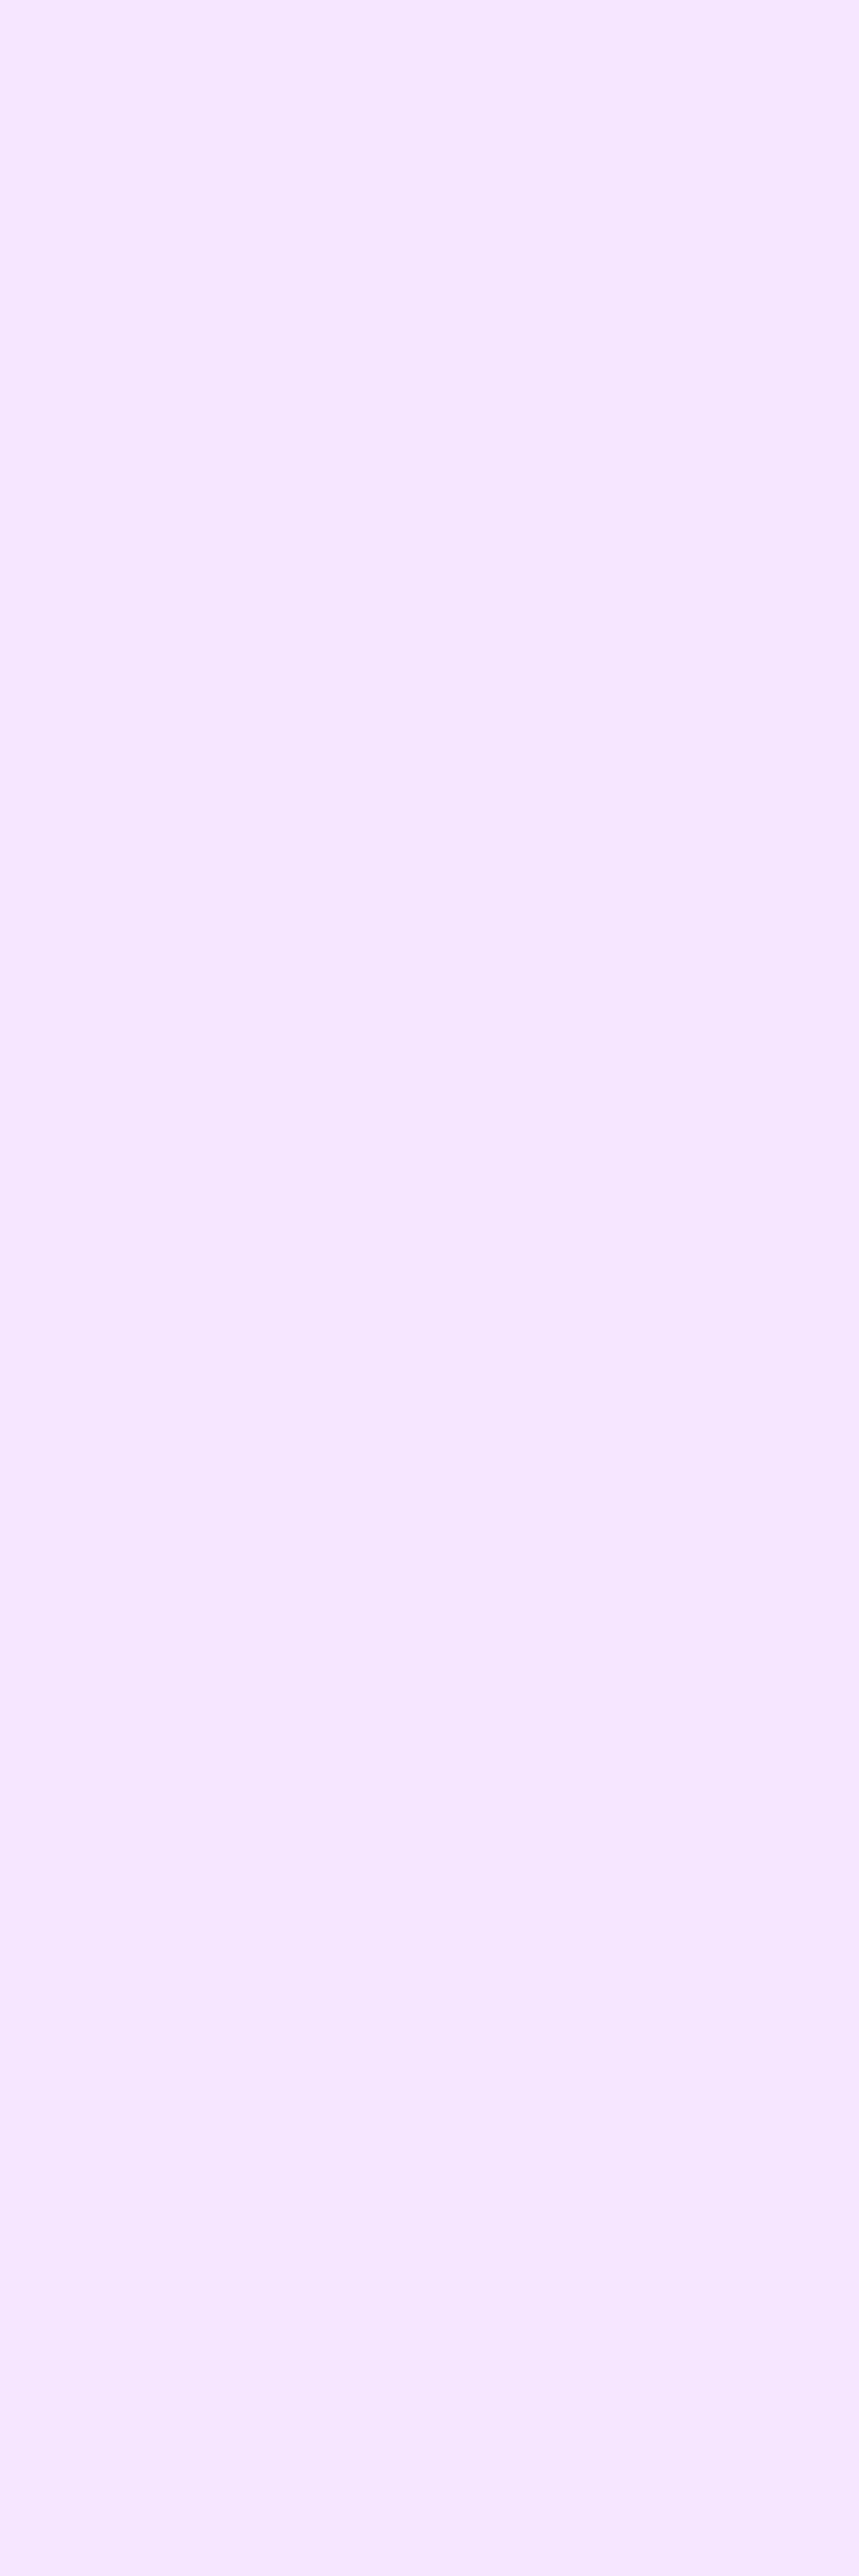 f2u] Plain Pastel Purple BG by rollingpoly on DeviantArt